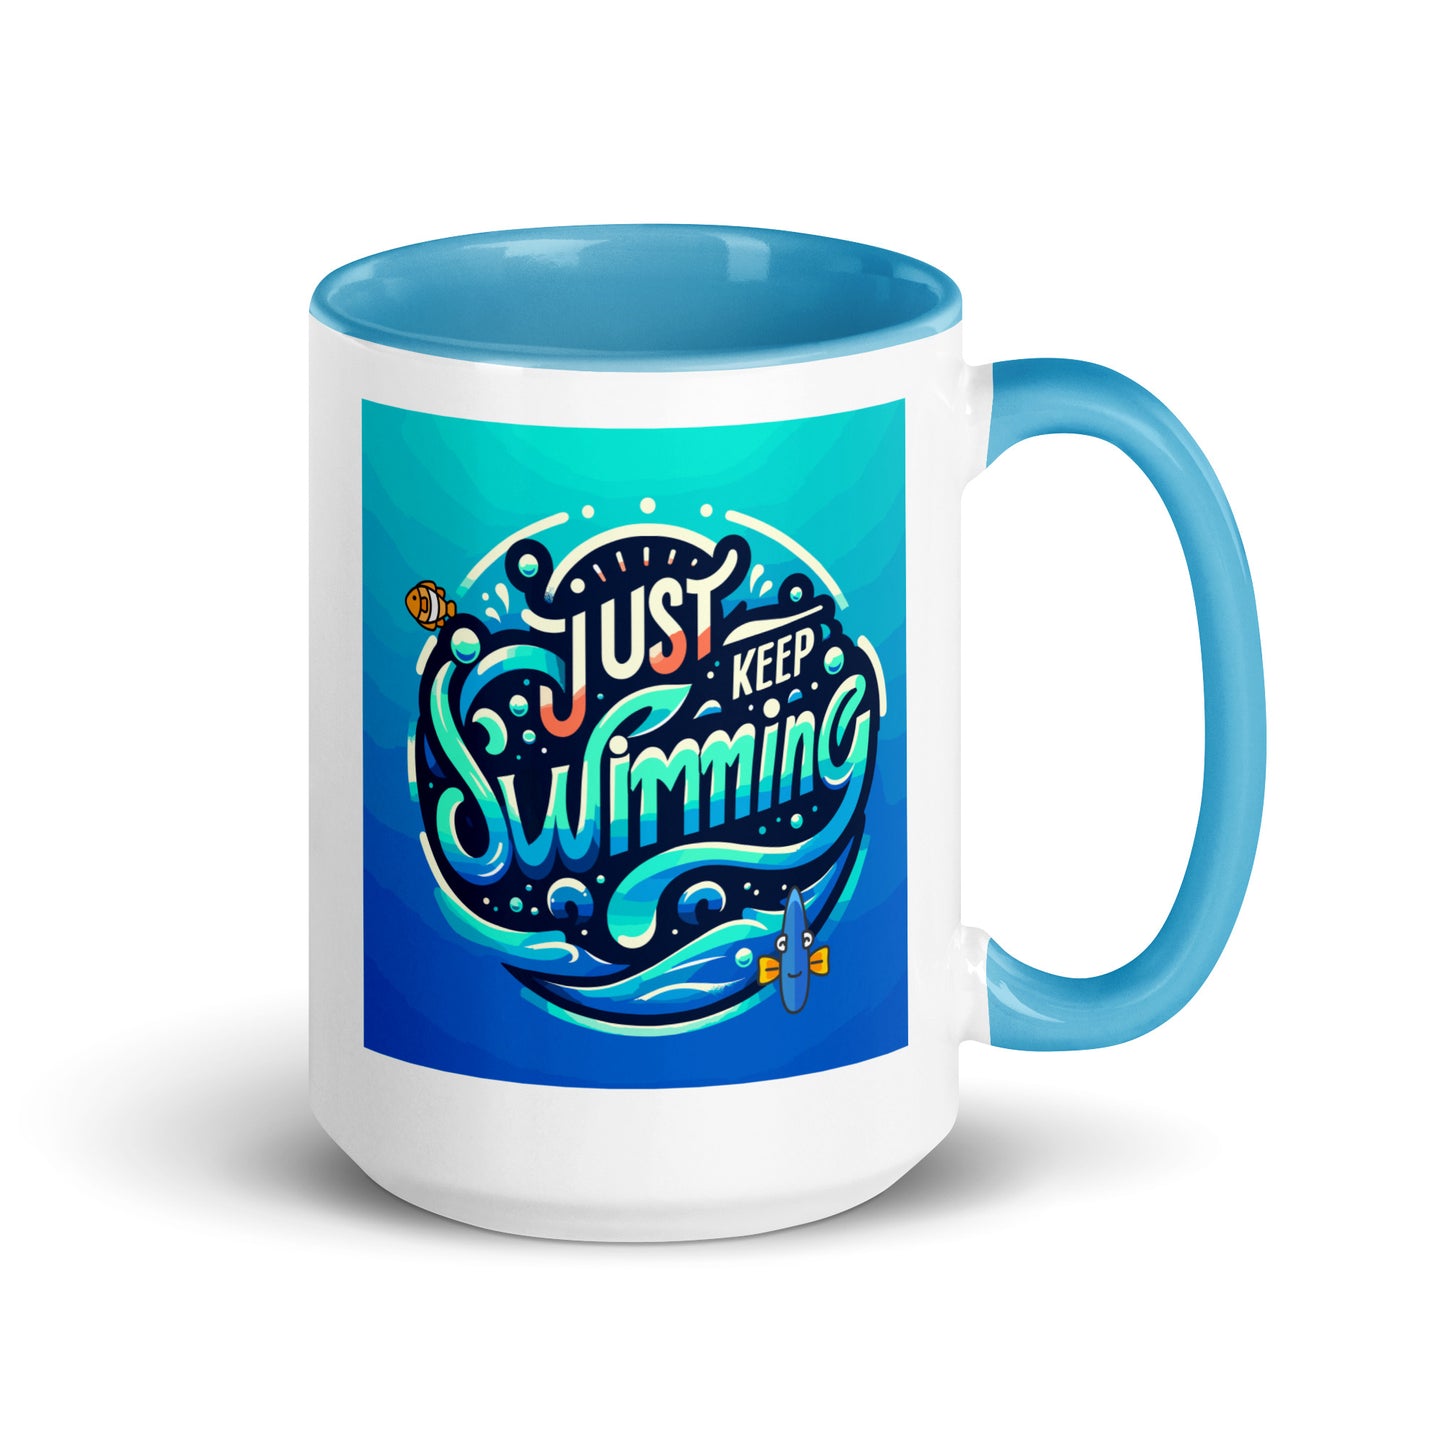 Just Keep Swimming 15 oz. Mug with Blue Color Inside